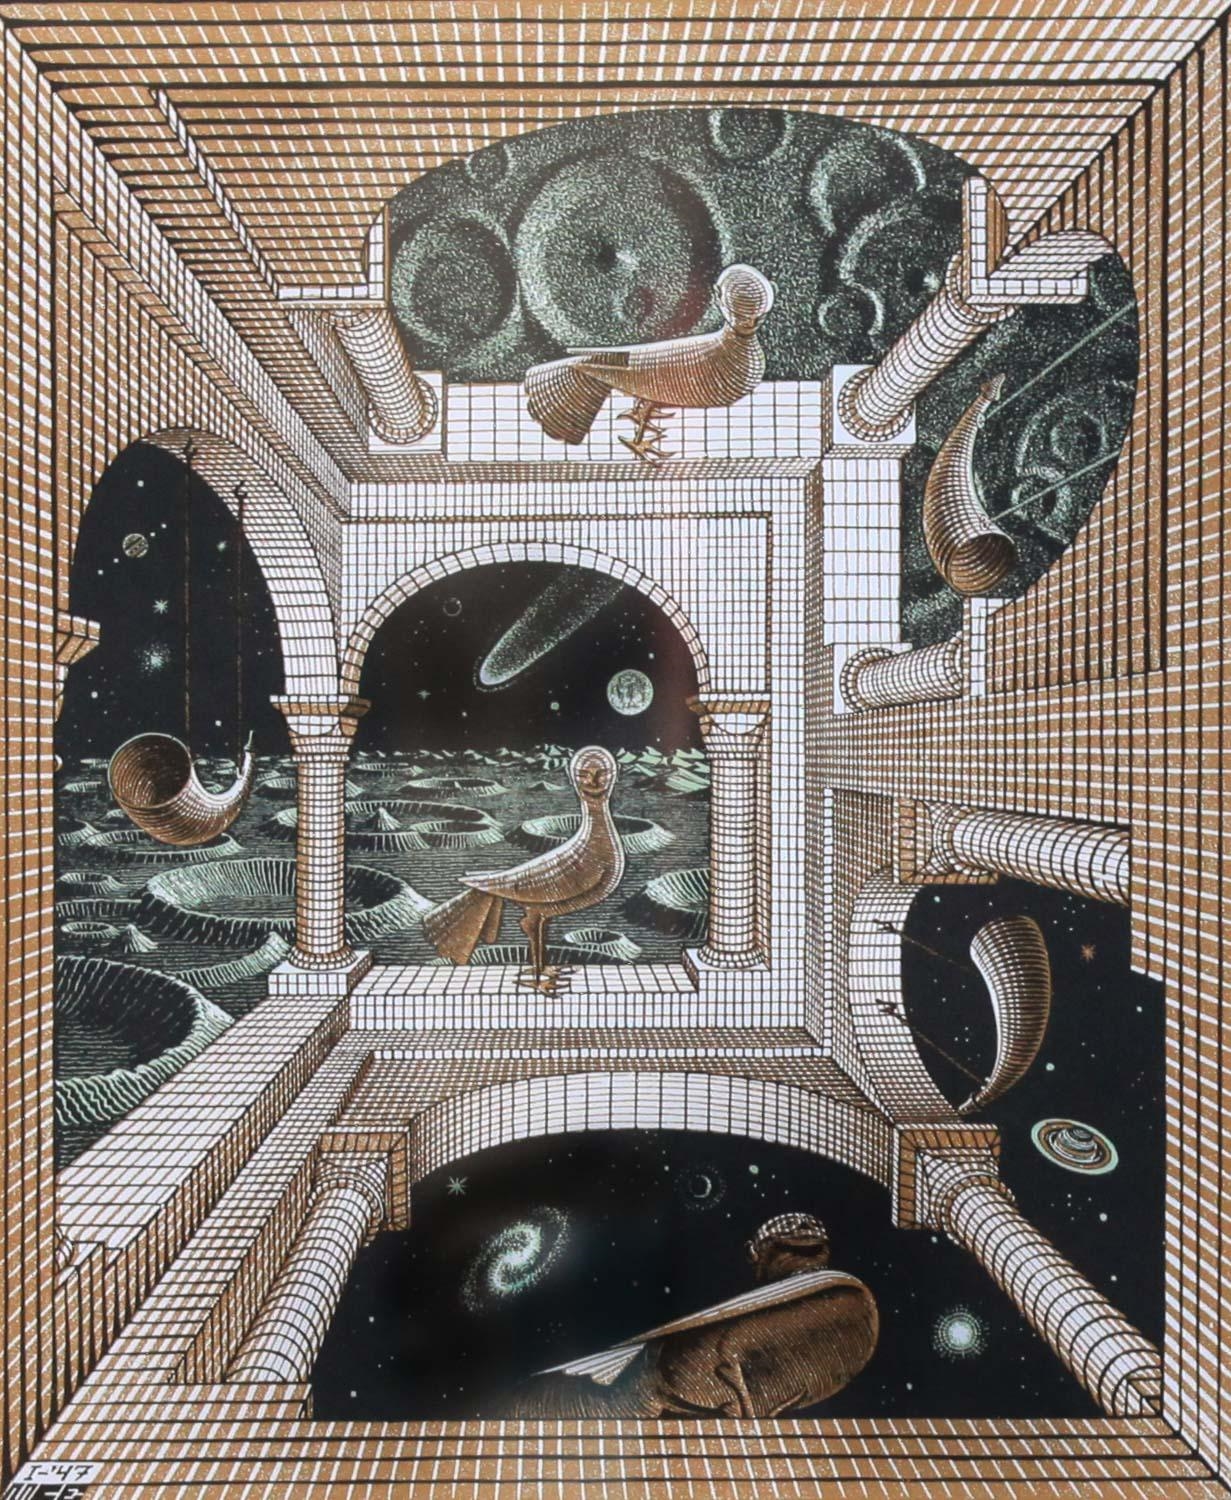 Another World by Maurits Cornelis Escher